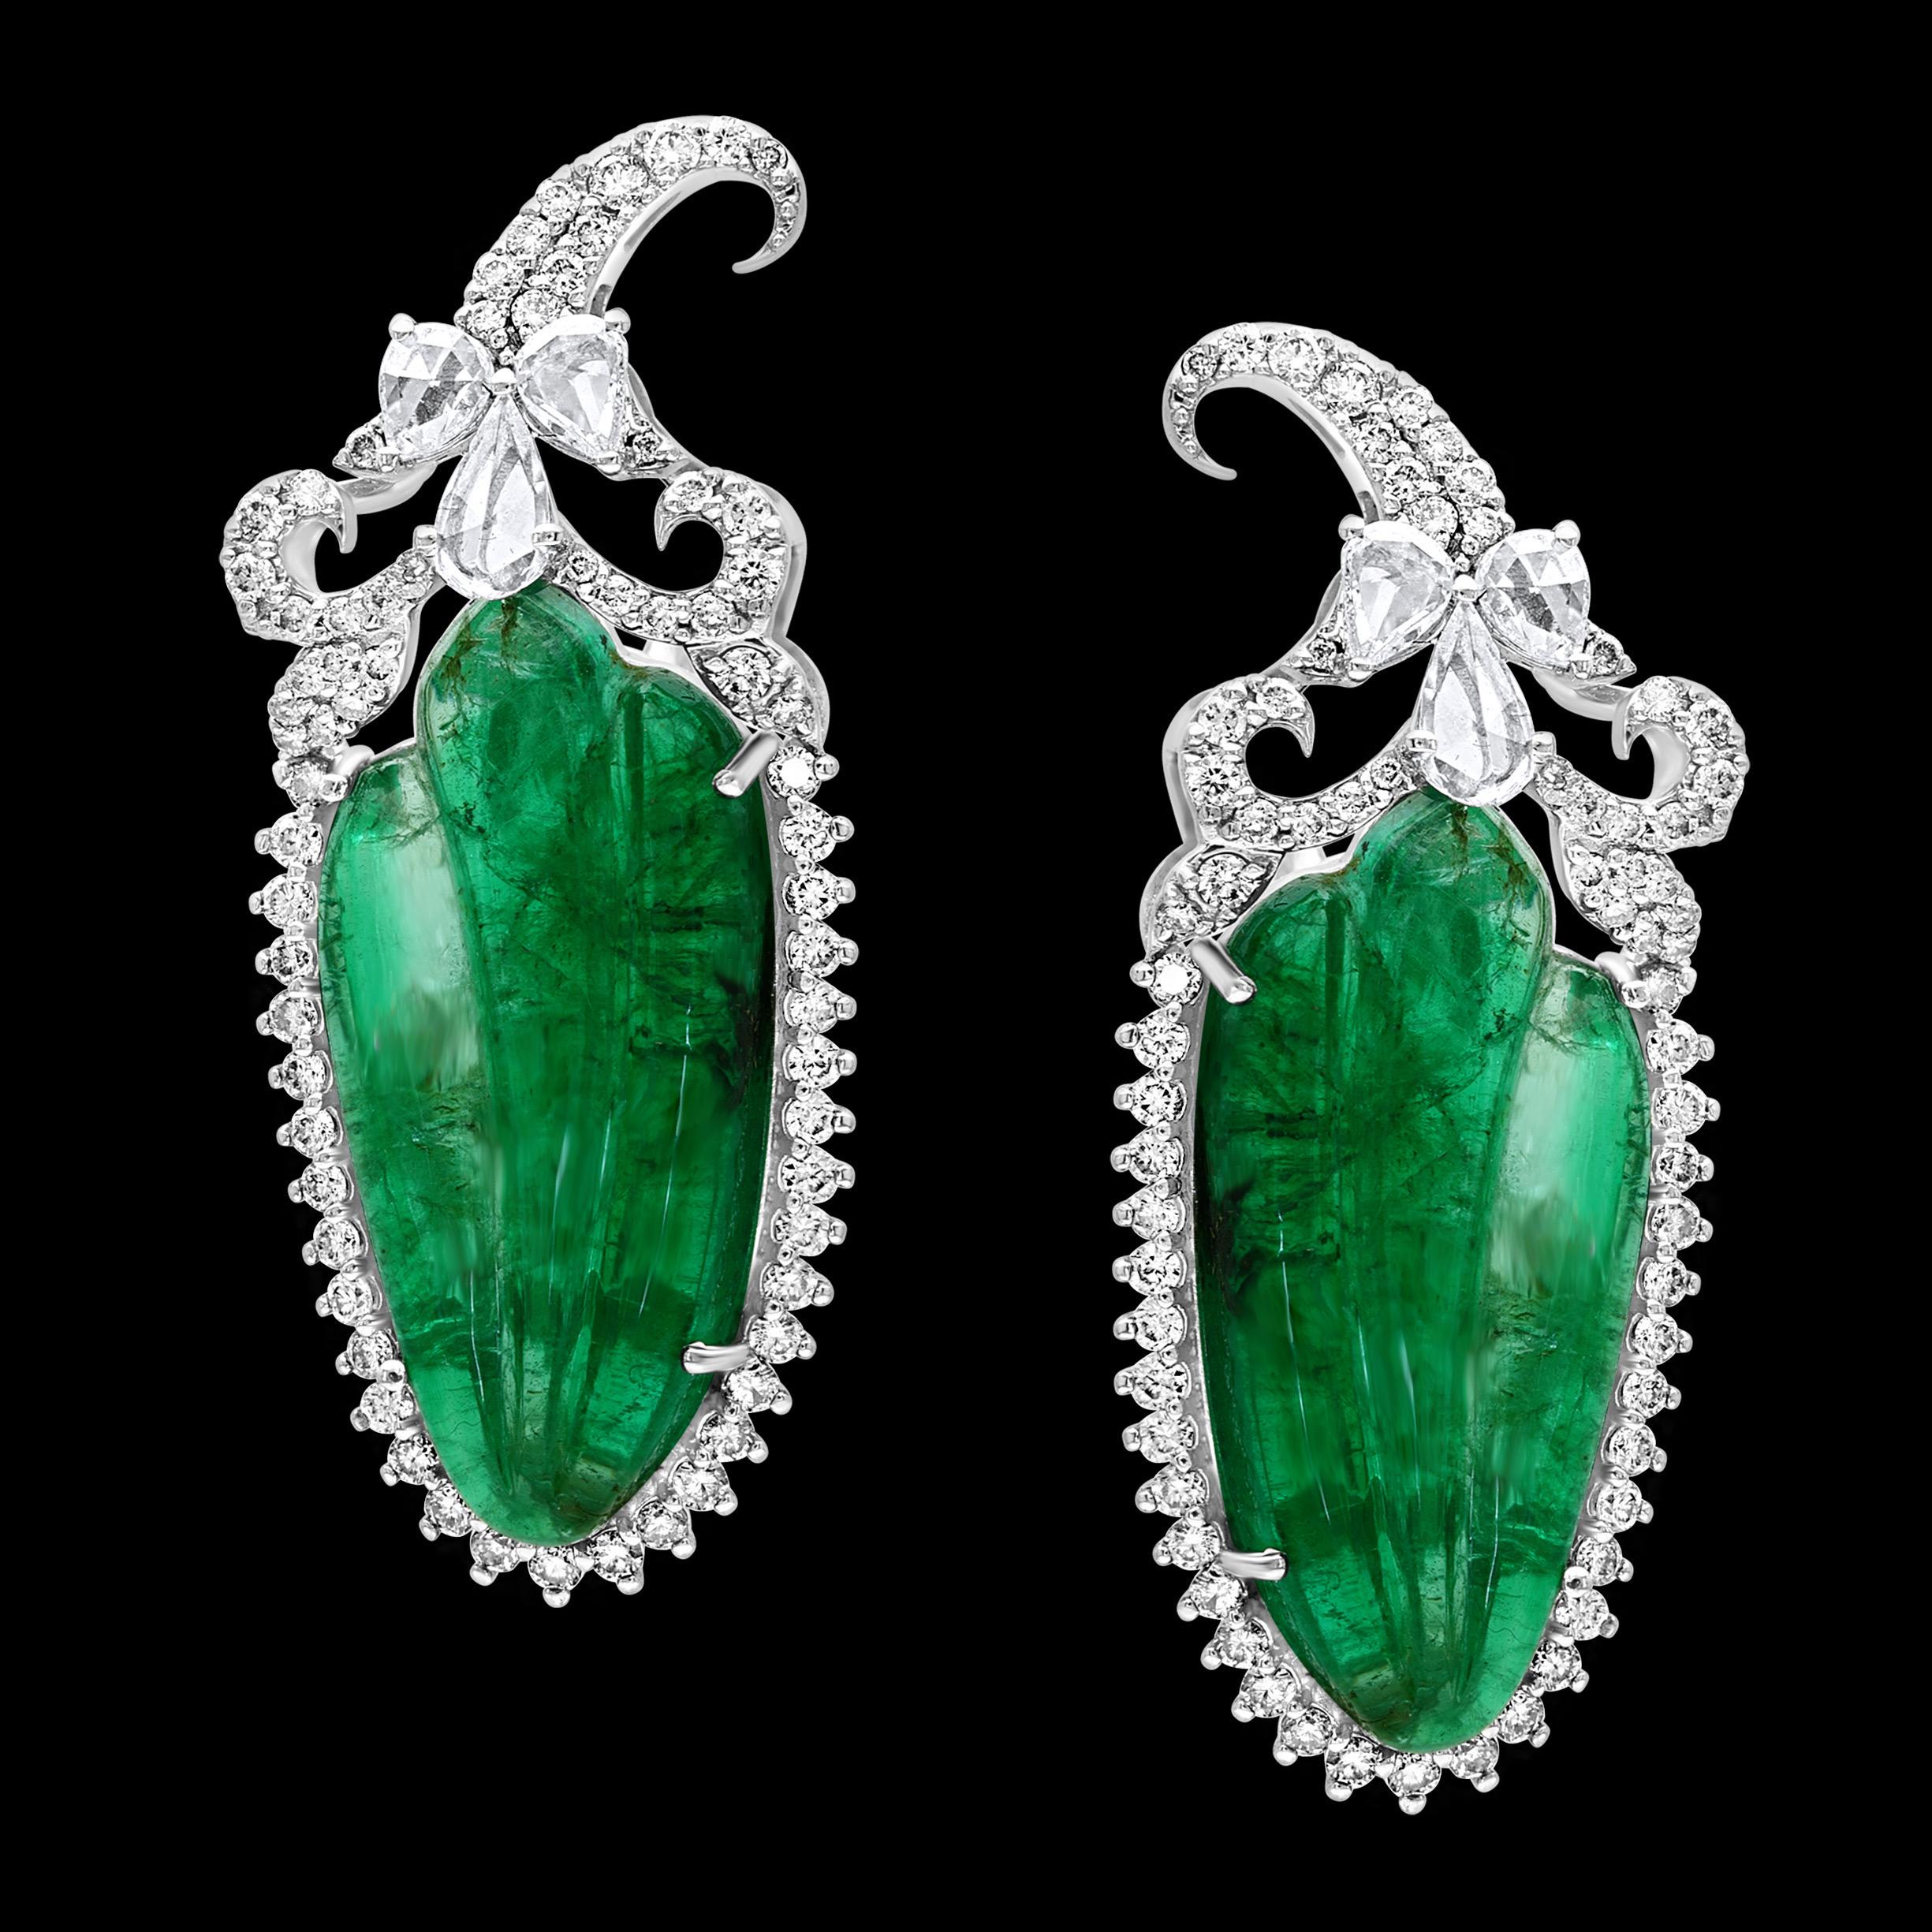 Emerald Cut 22 Ct Carved Emerald & 2 Ct Diamond Earrings 18 Karat White Gold Post Earrings For Sale